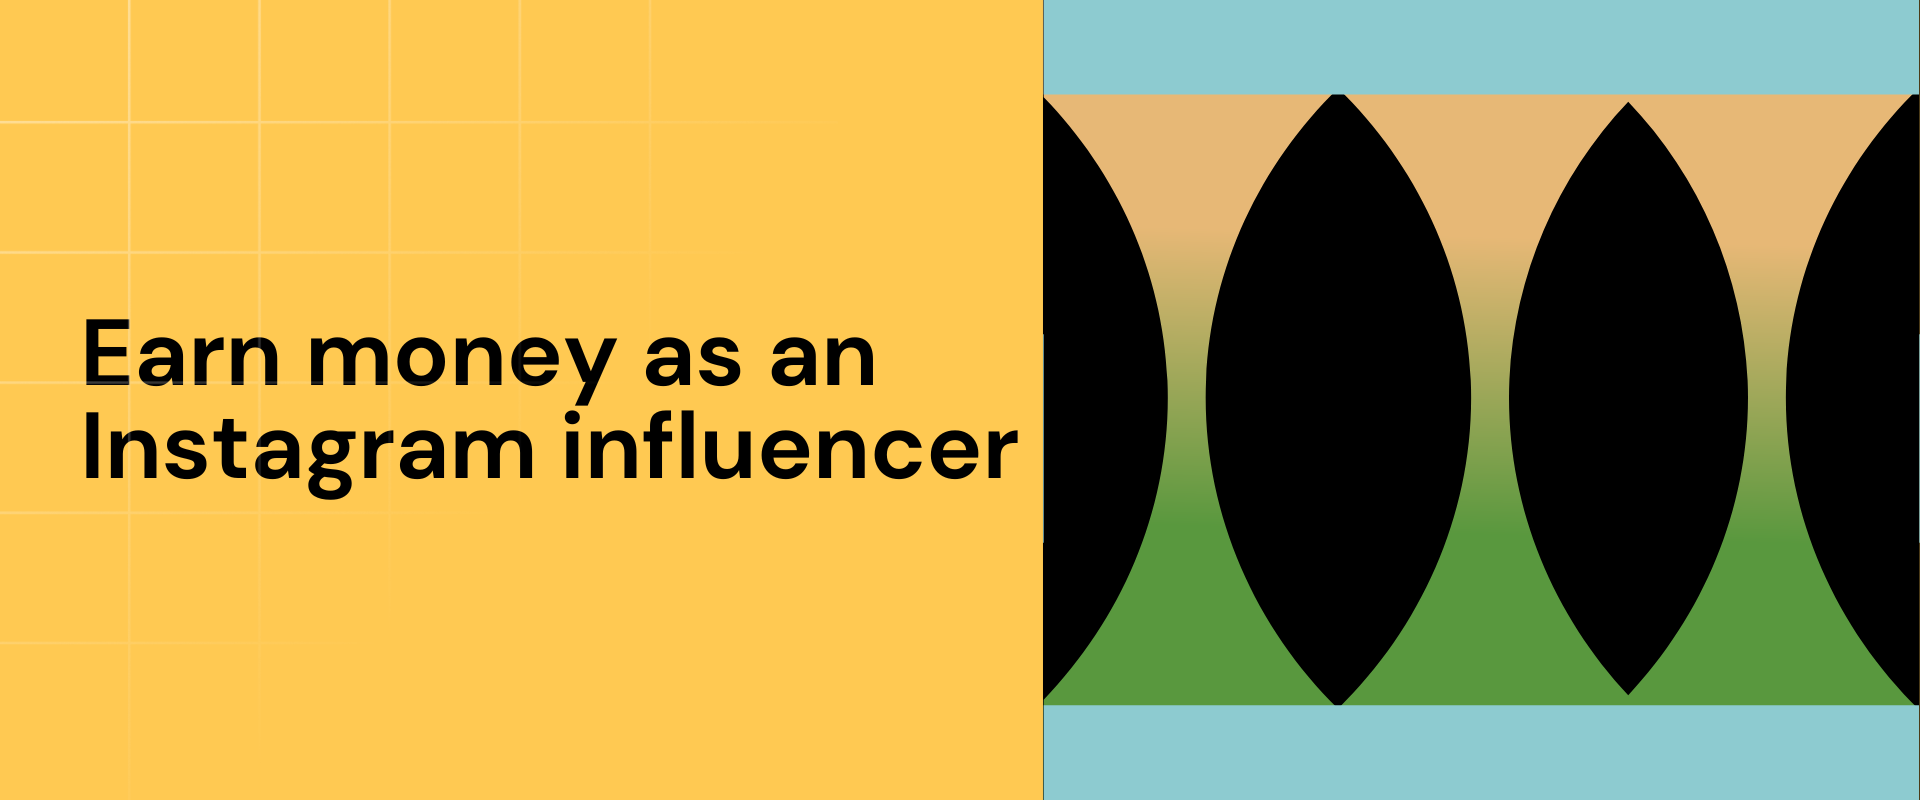 How to earn money as an Instagram influencer (10 Best ways)